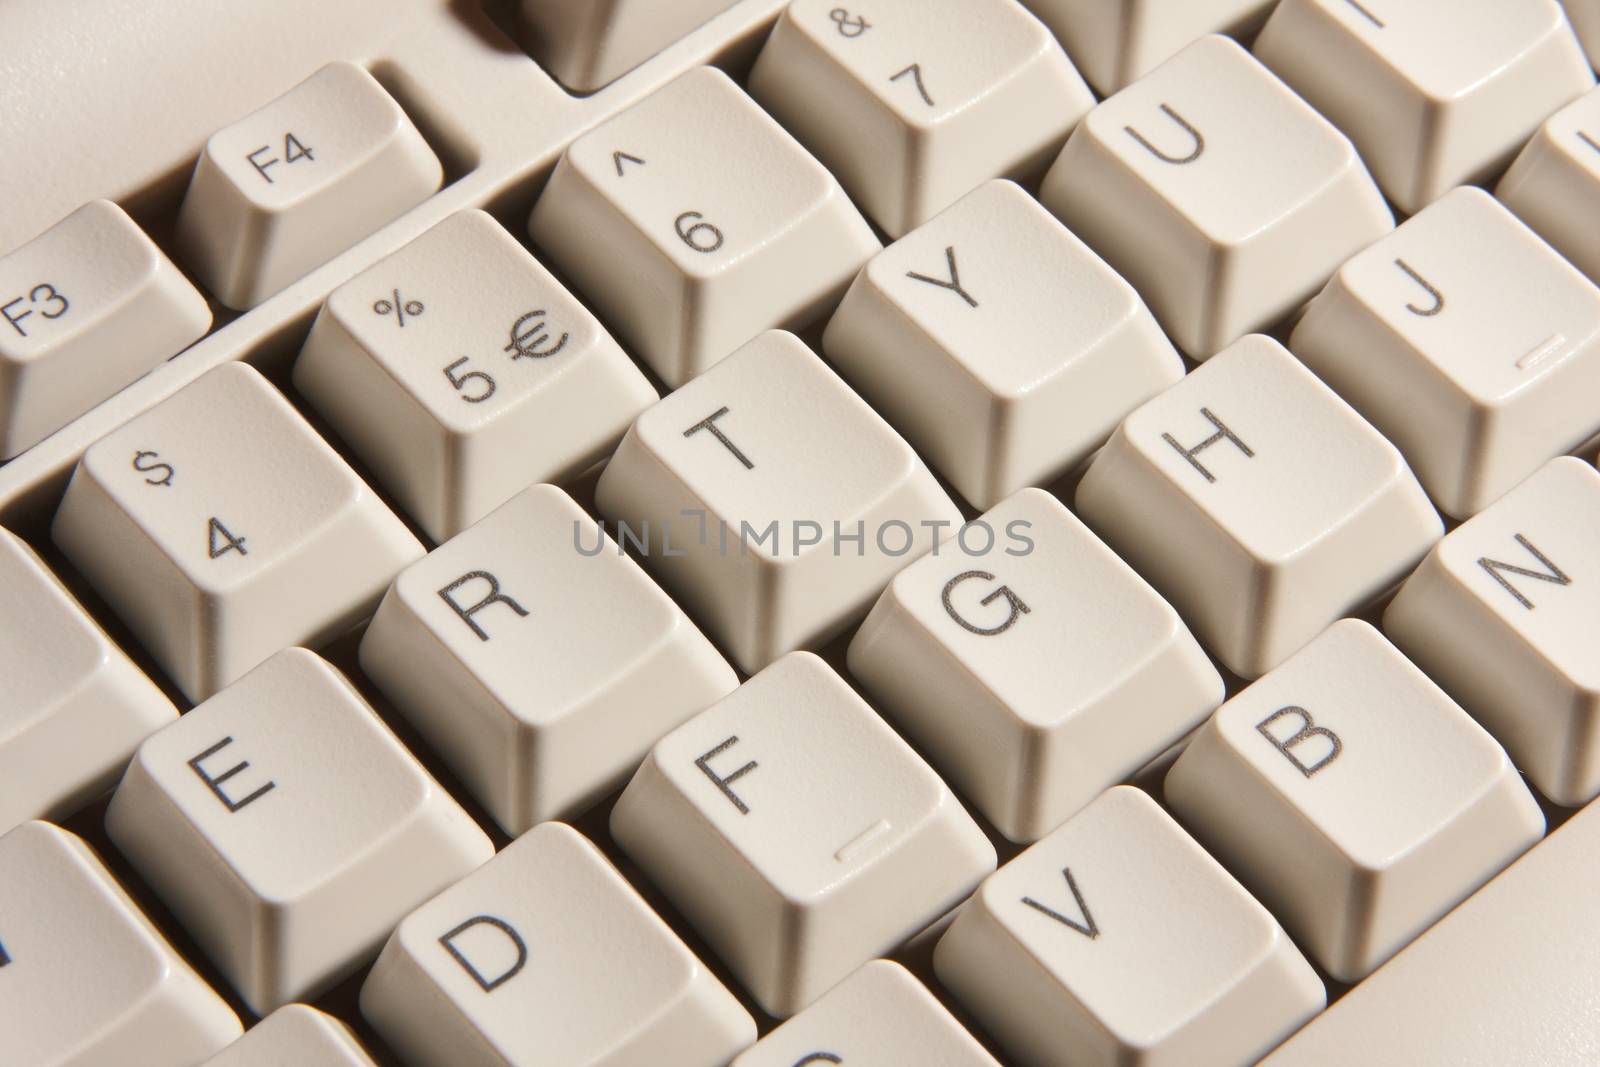 Computer keyboard by Chemik11